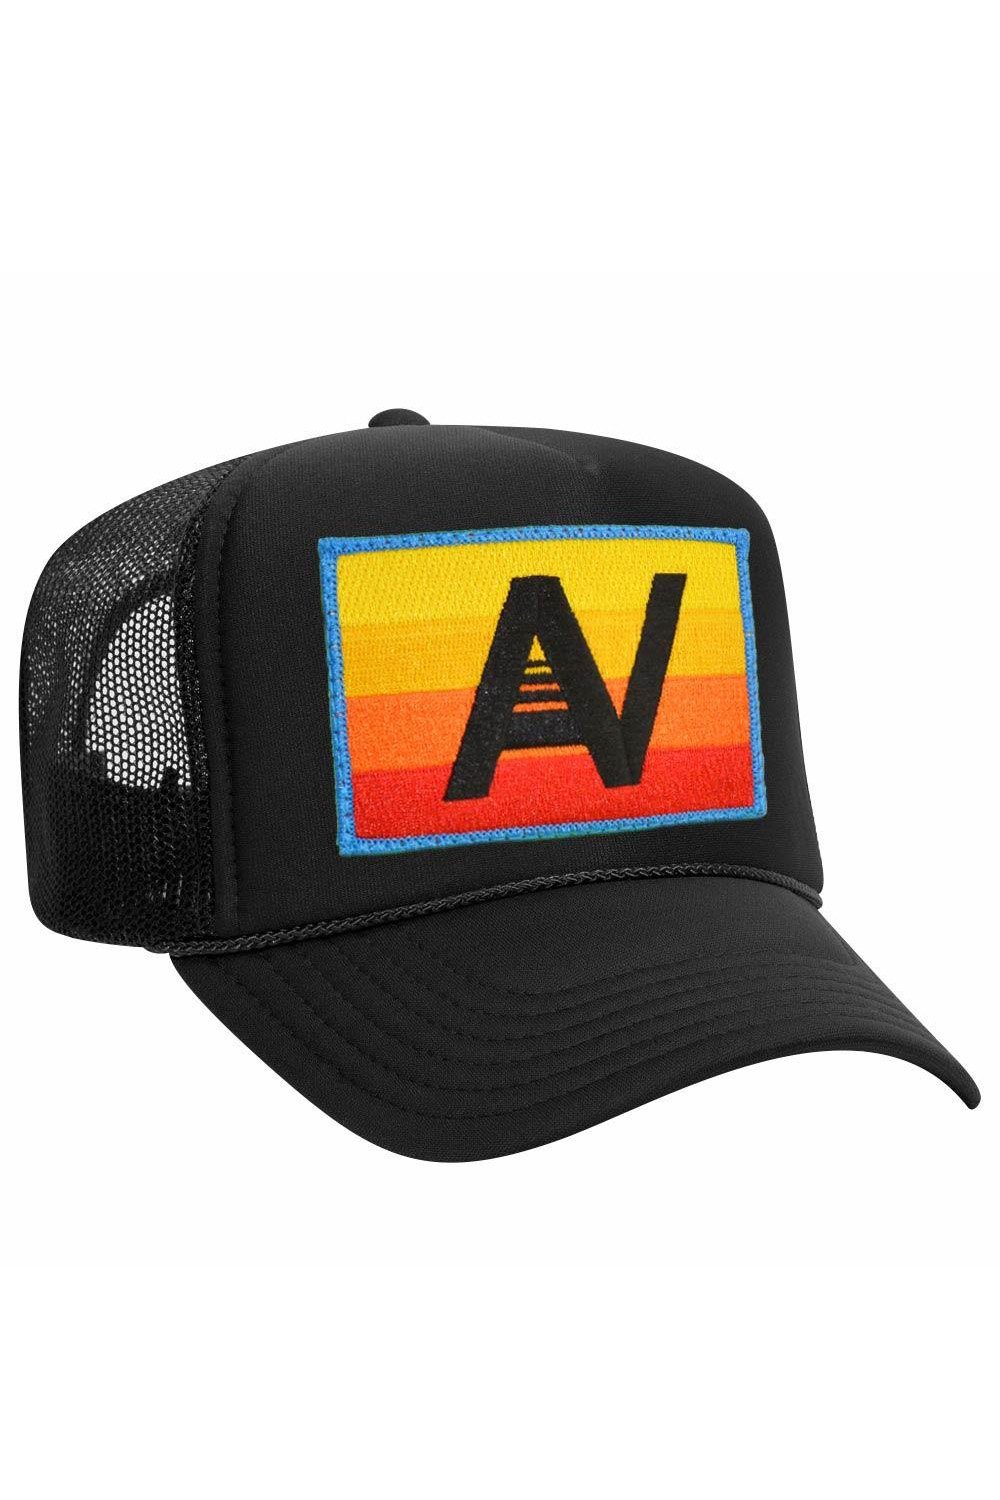 Aviator Nation Logo Rainbow Vintage Trucker Hat-Black